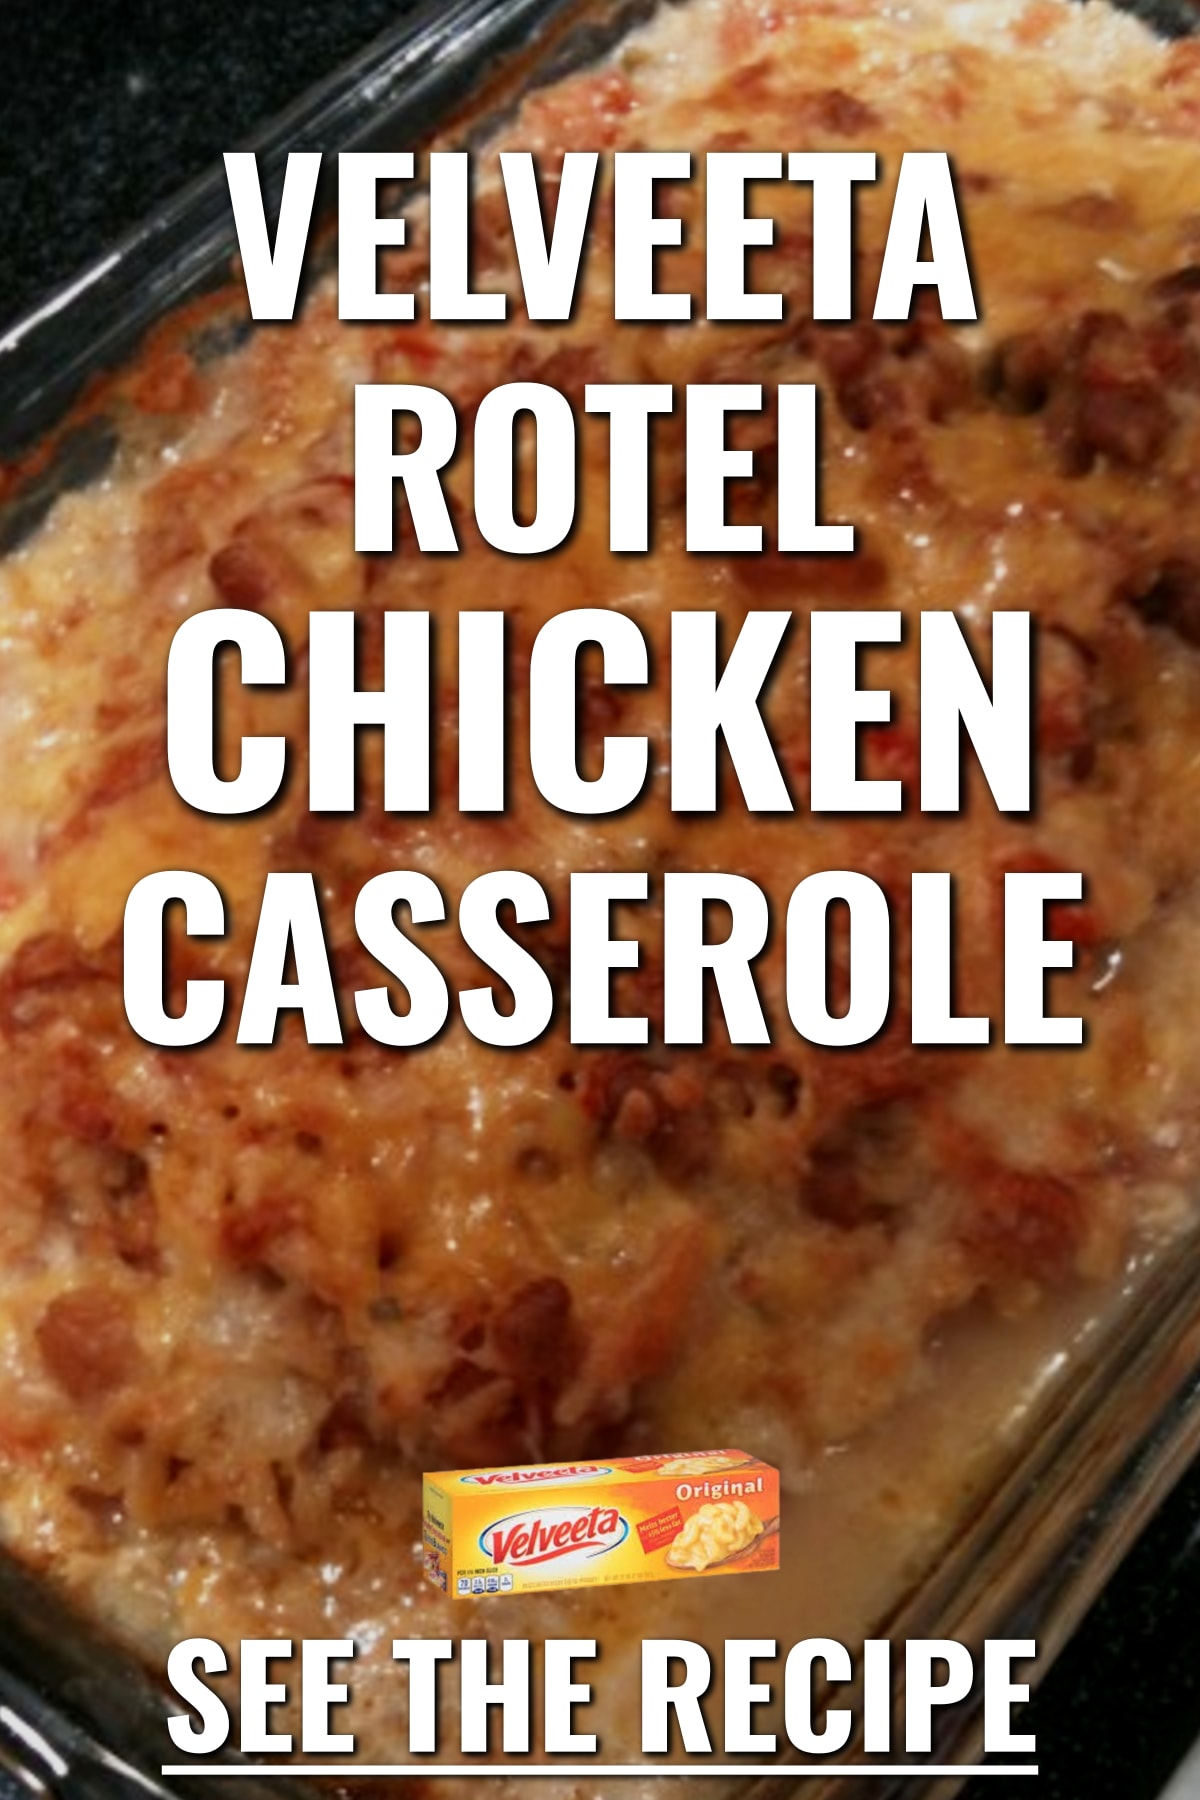 Velveeta Rotel Chicken Casserole